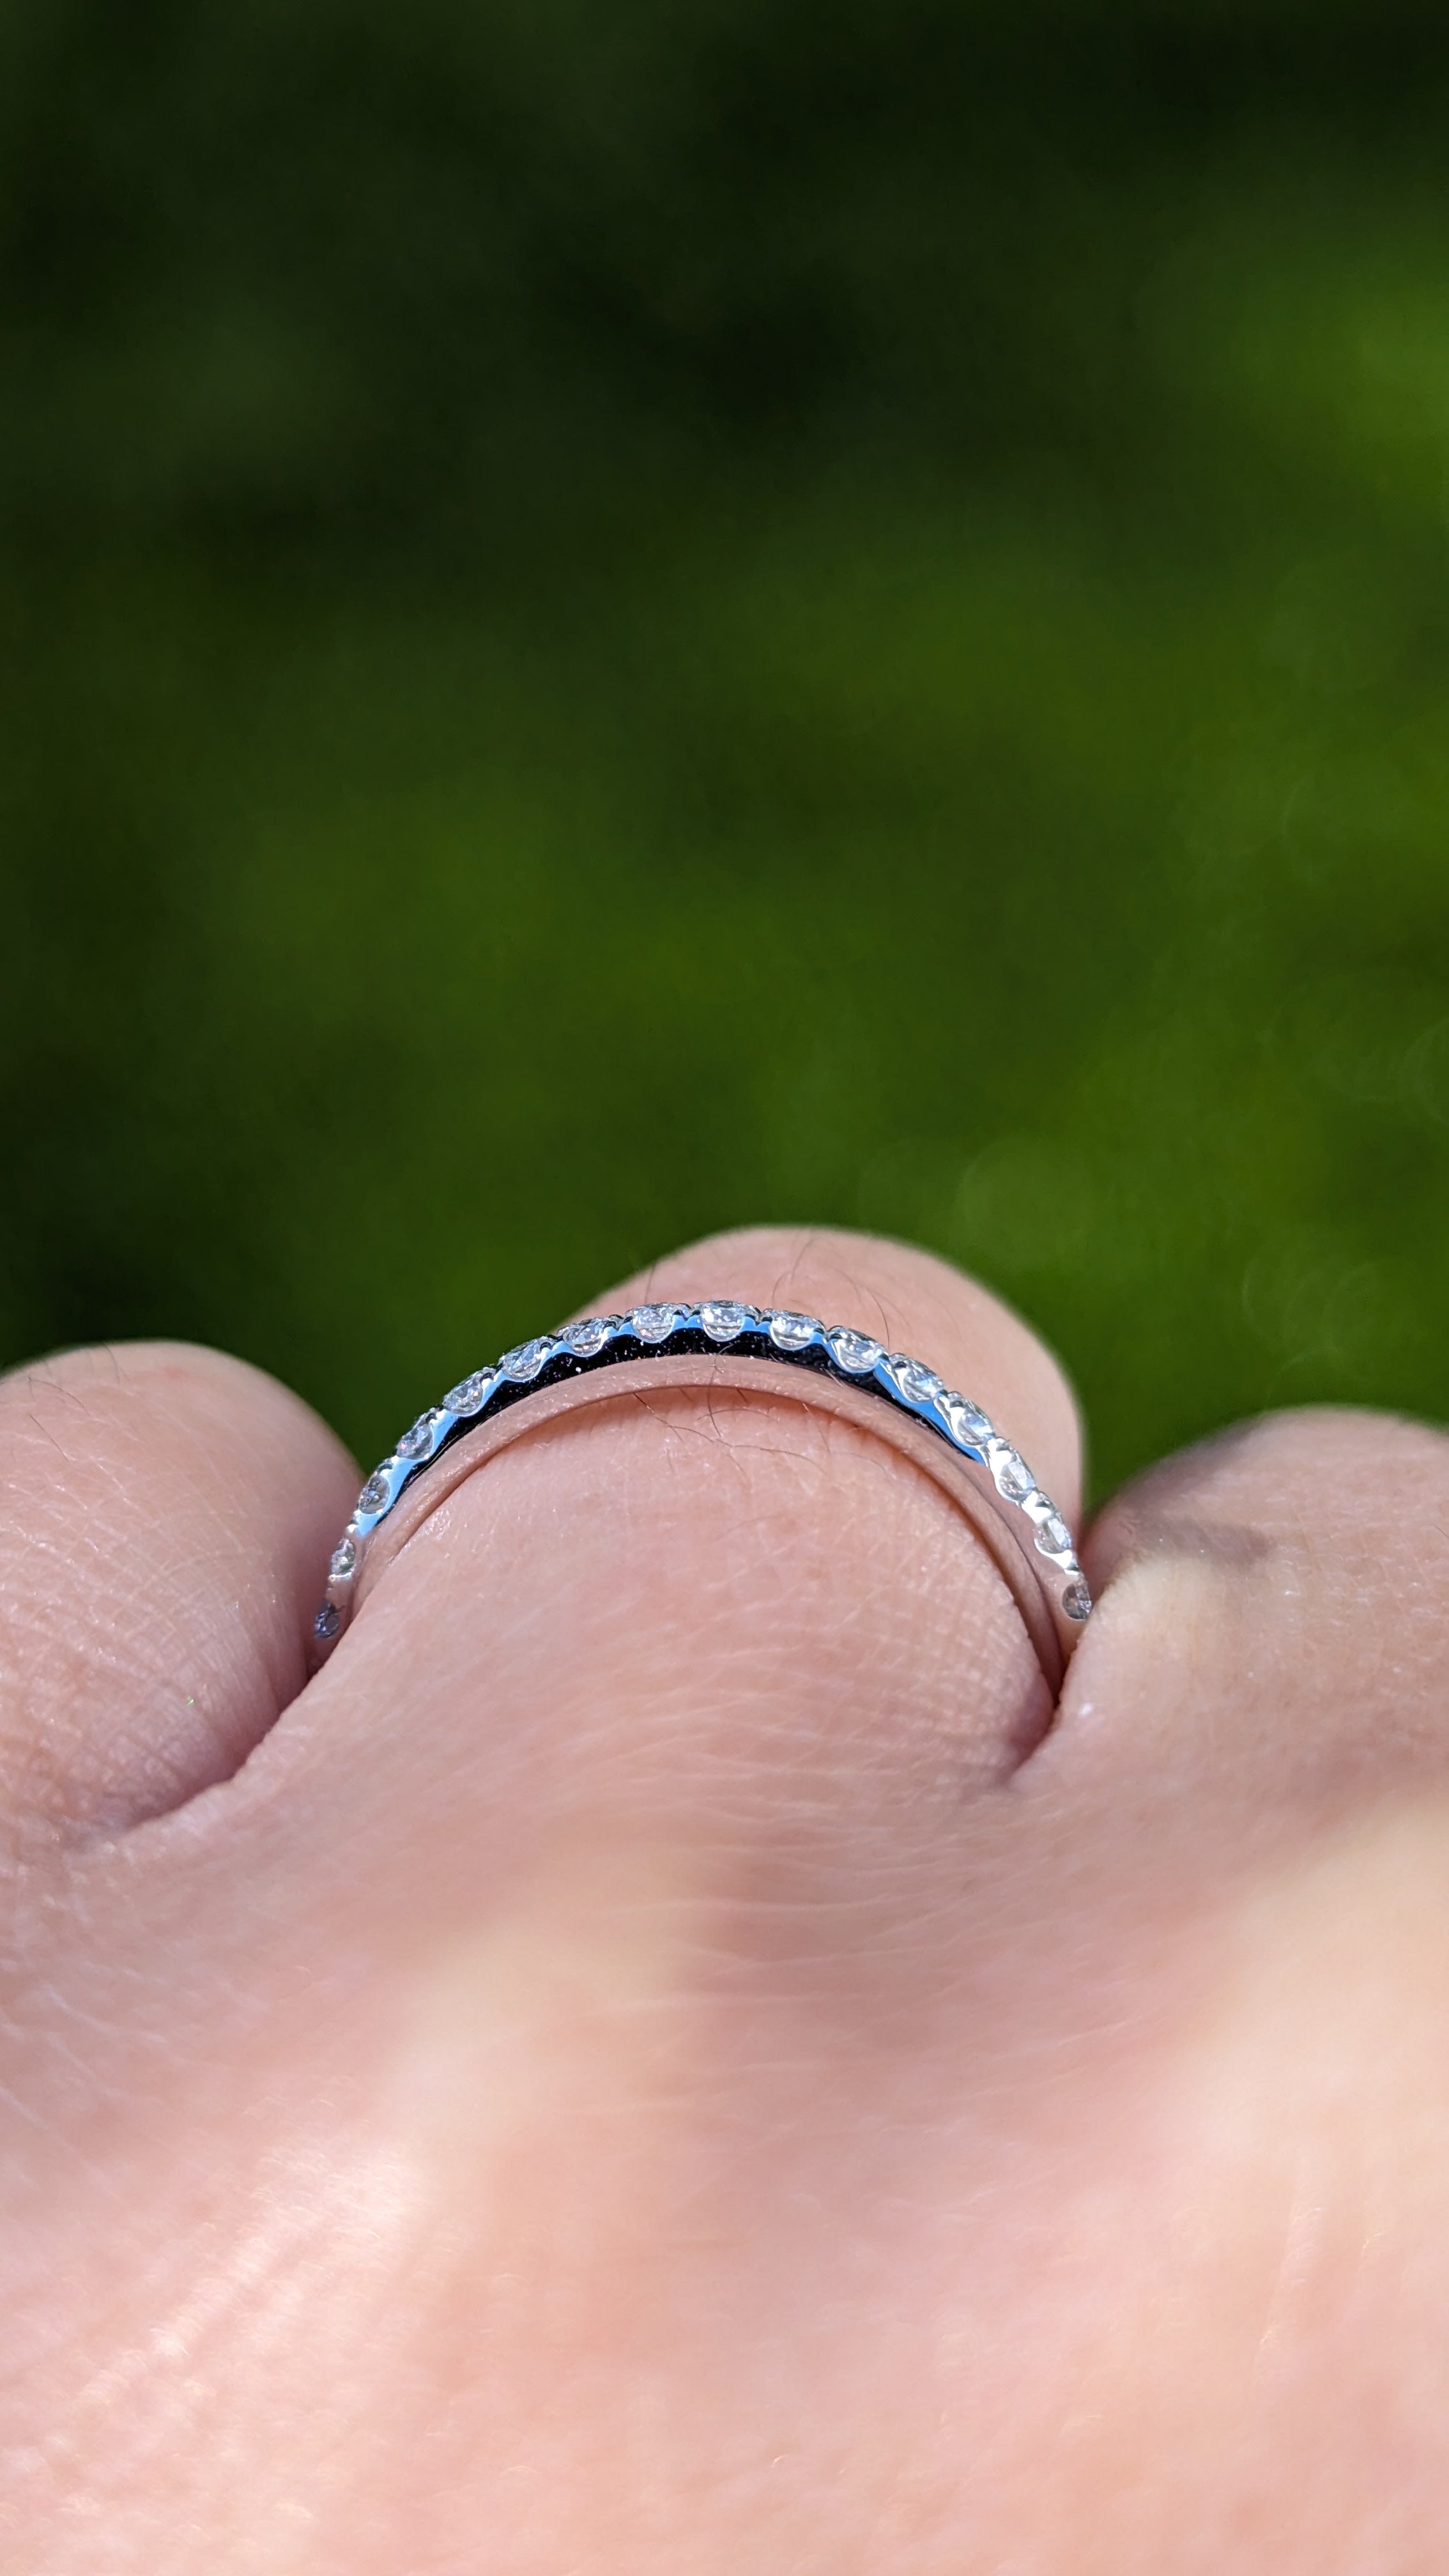 14k White Gold 2mm Diamond Wedding Band Ring Brilliant Cut 0.33 carats